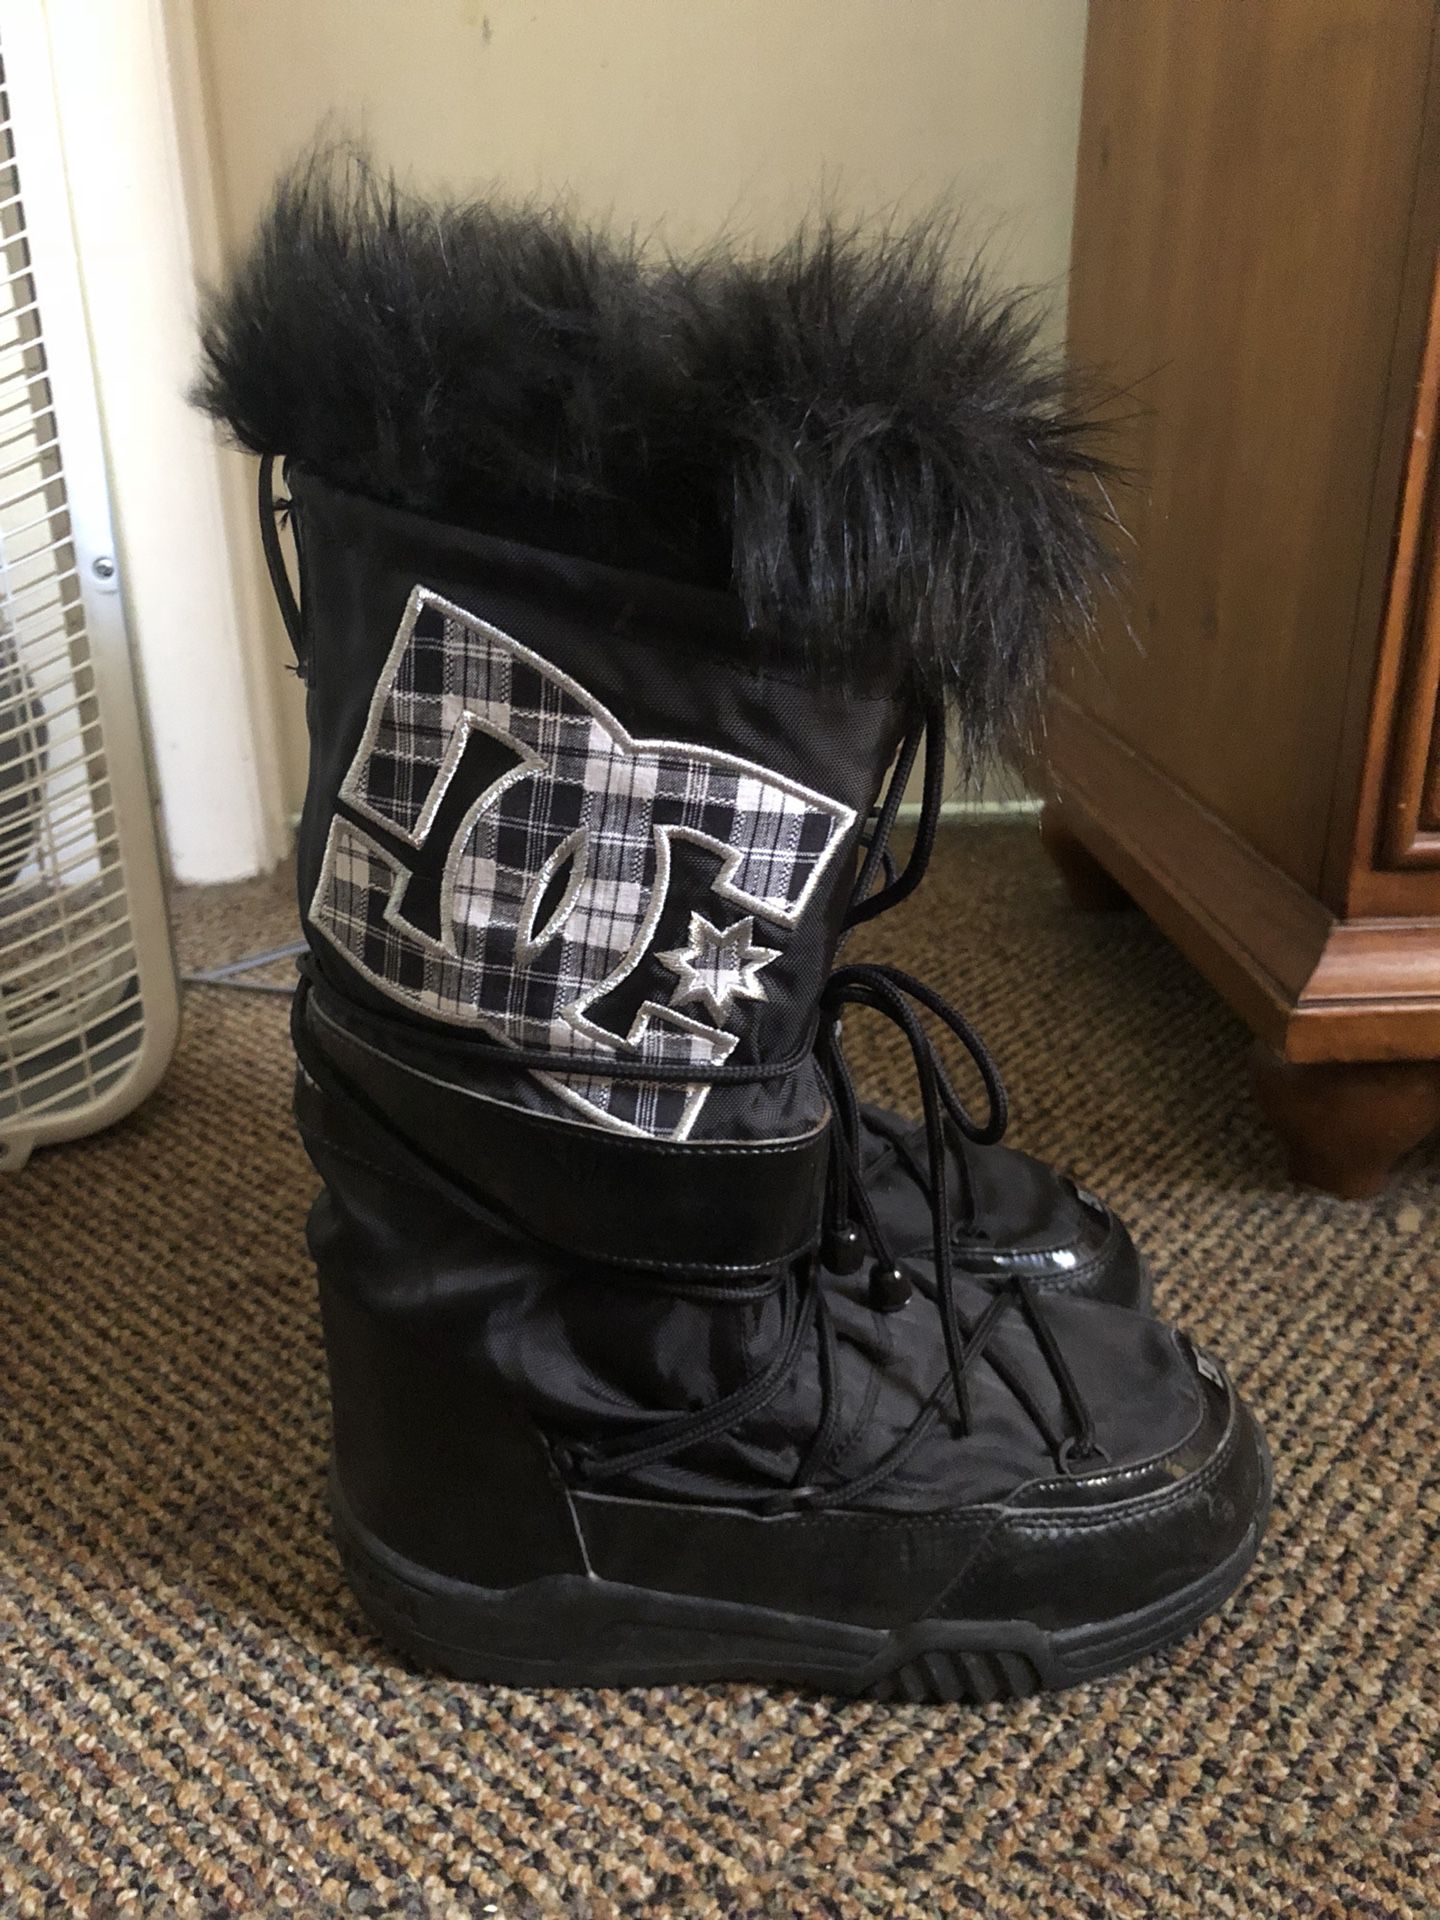 DC snow boots “women’s”